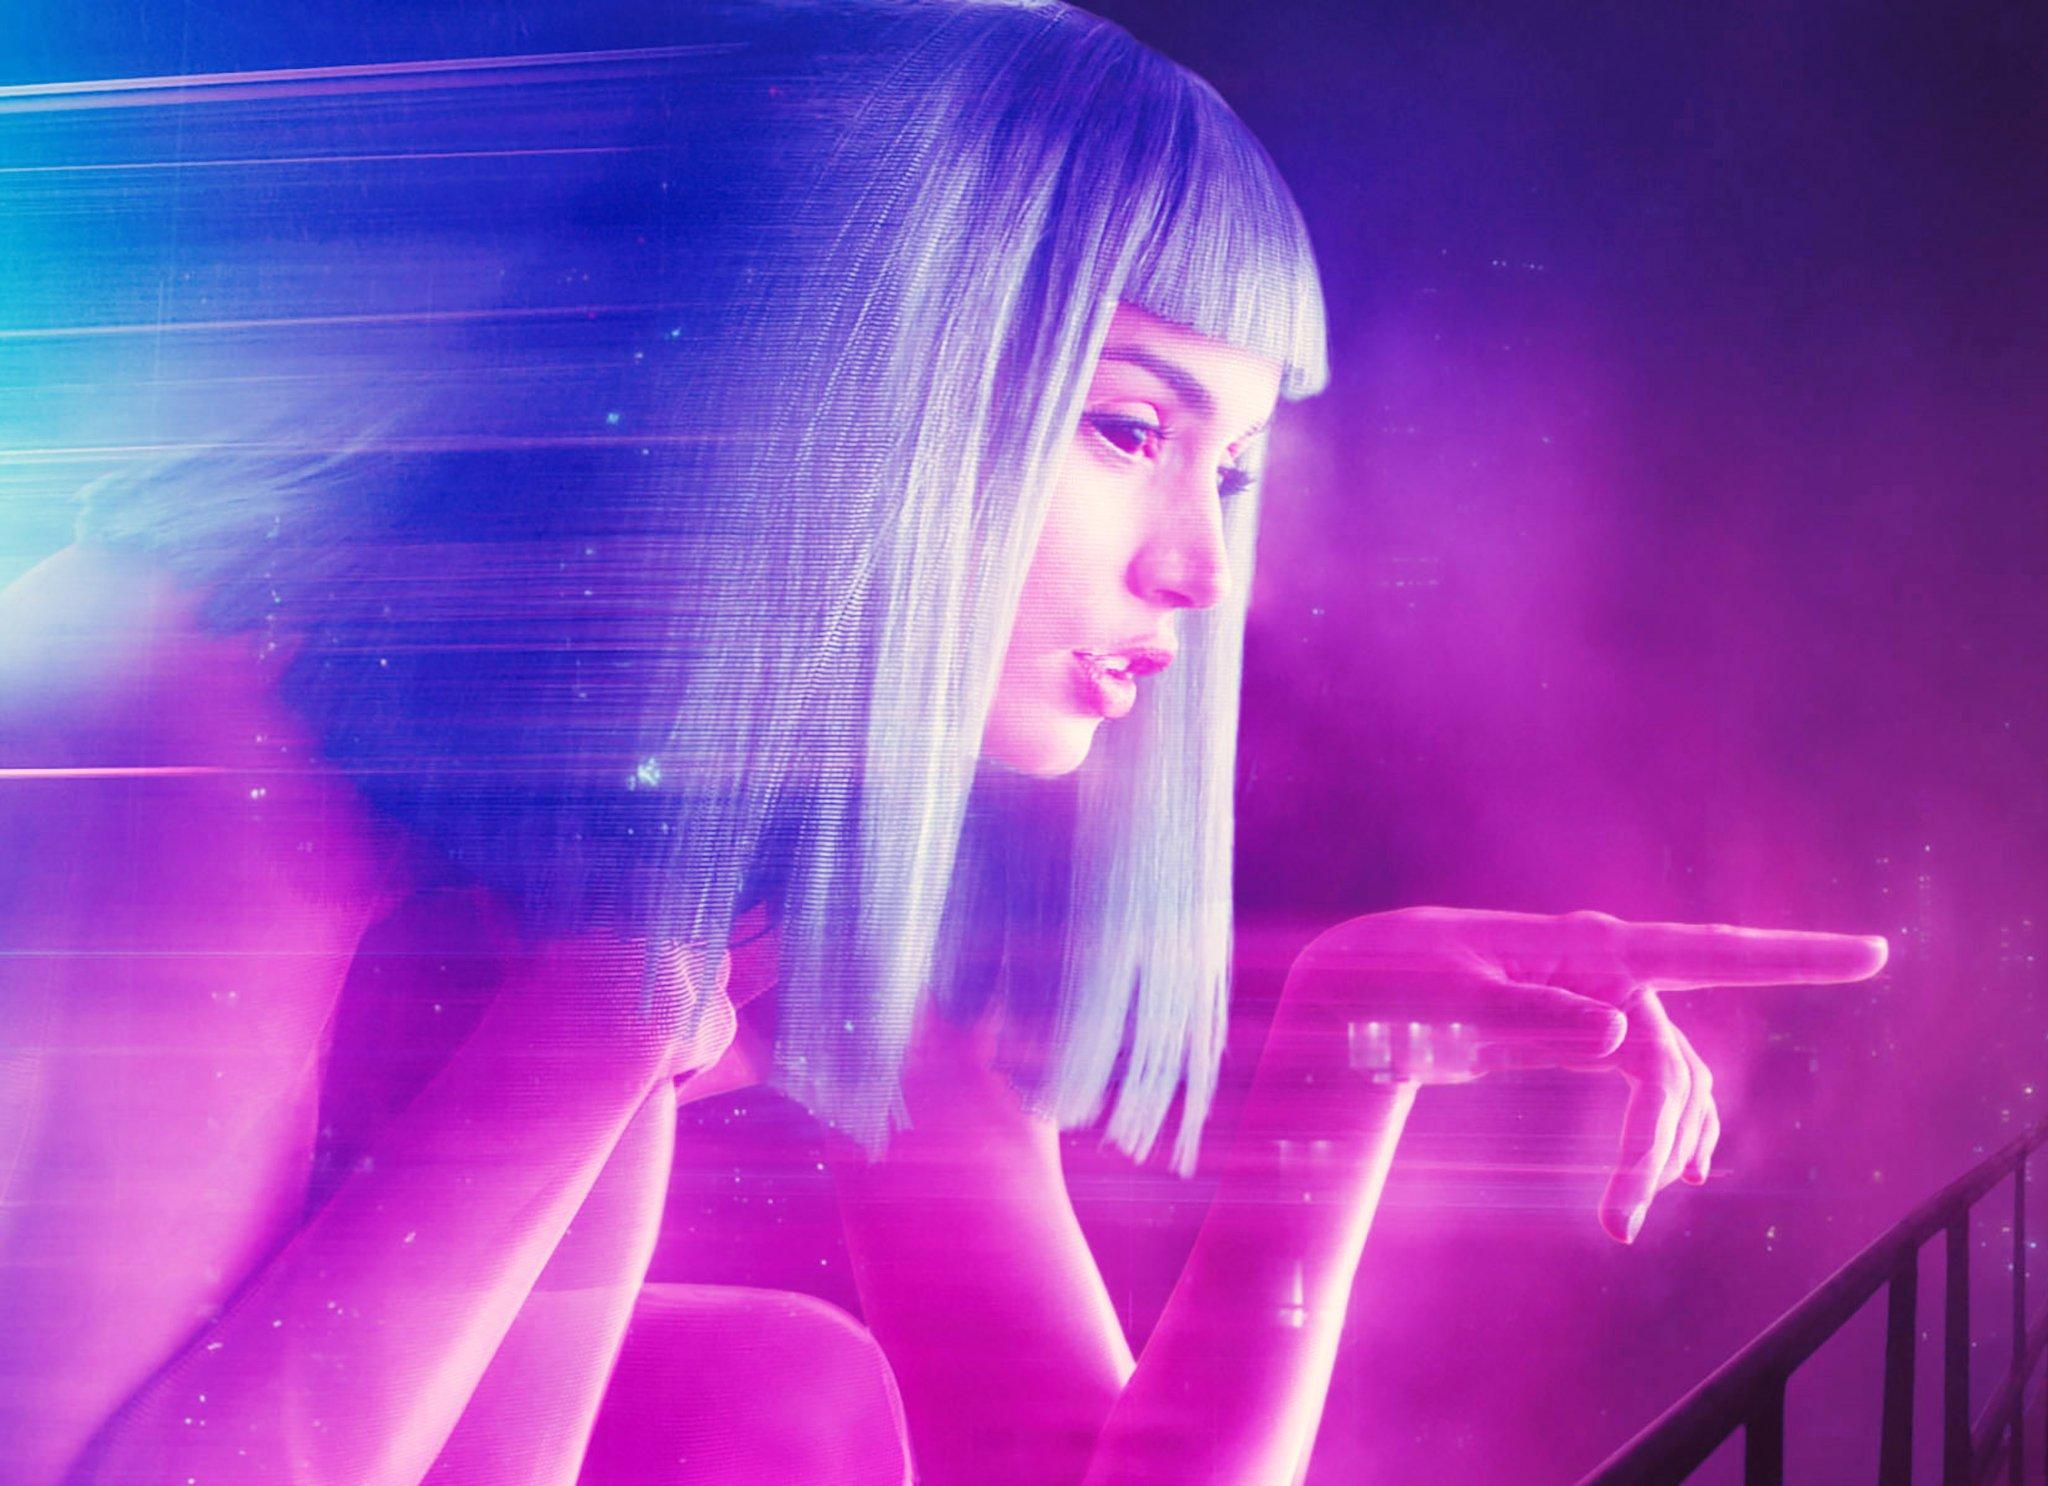 Movie review: 'Blade Runner 2049